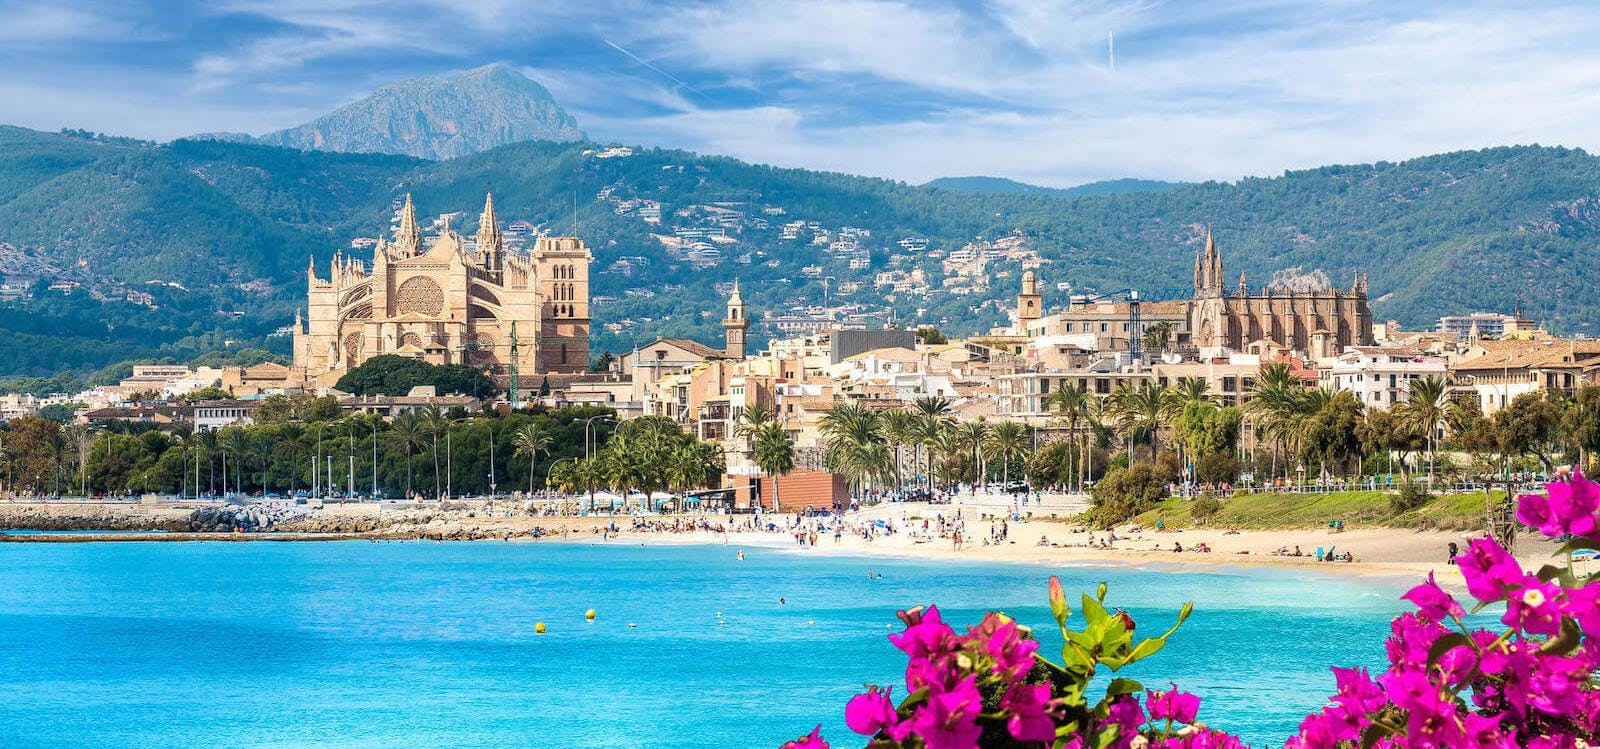 Palm de Mallorca city with cathedral by the sea in Mallorca